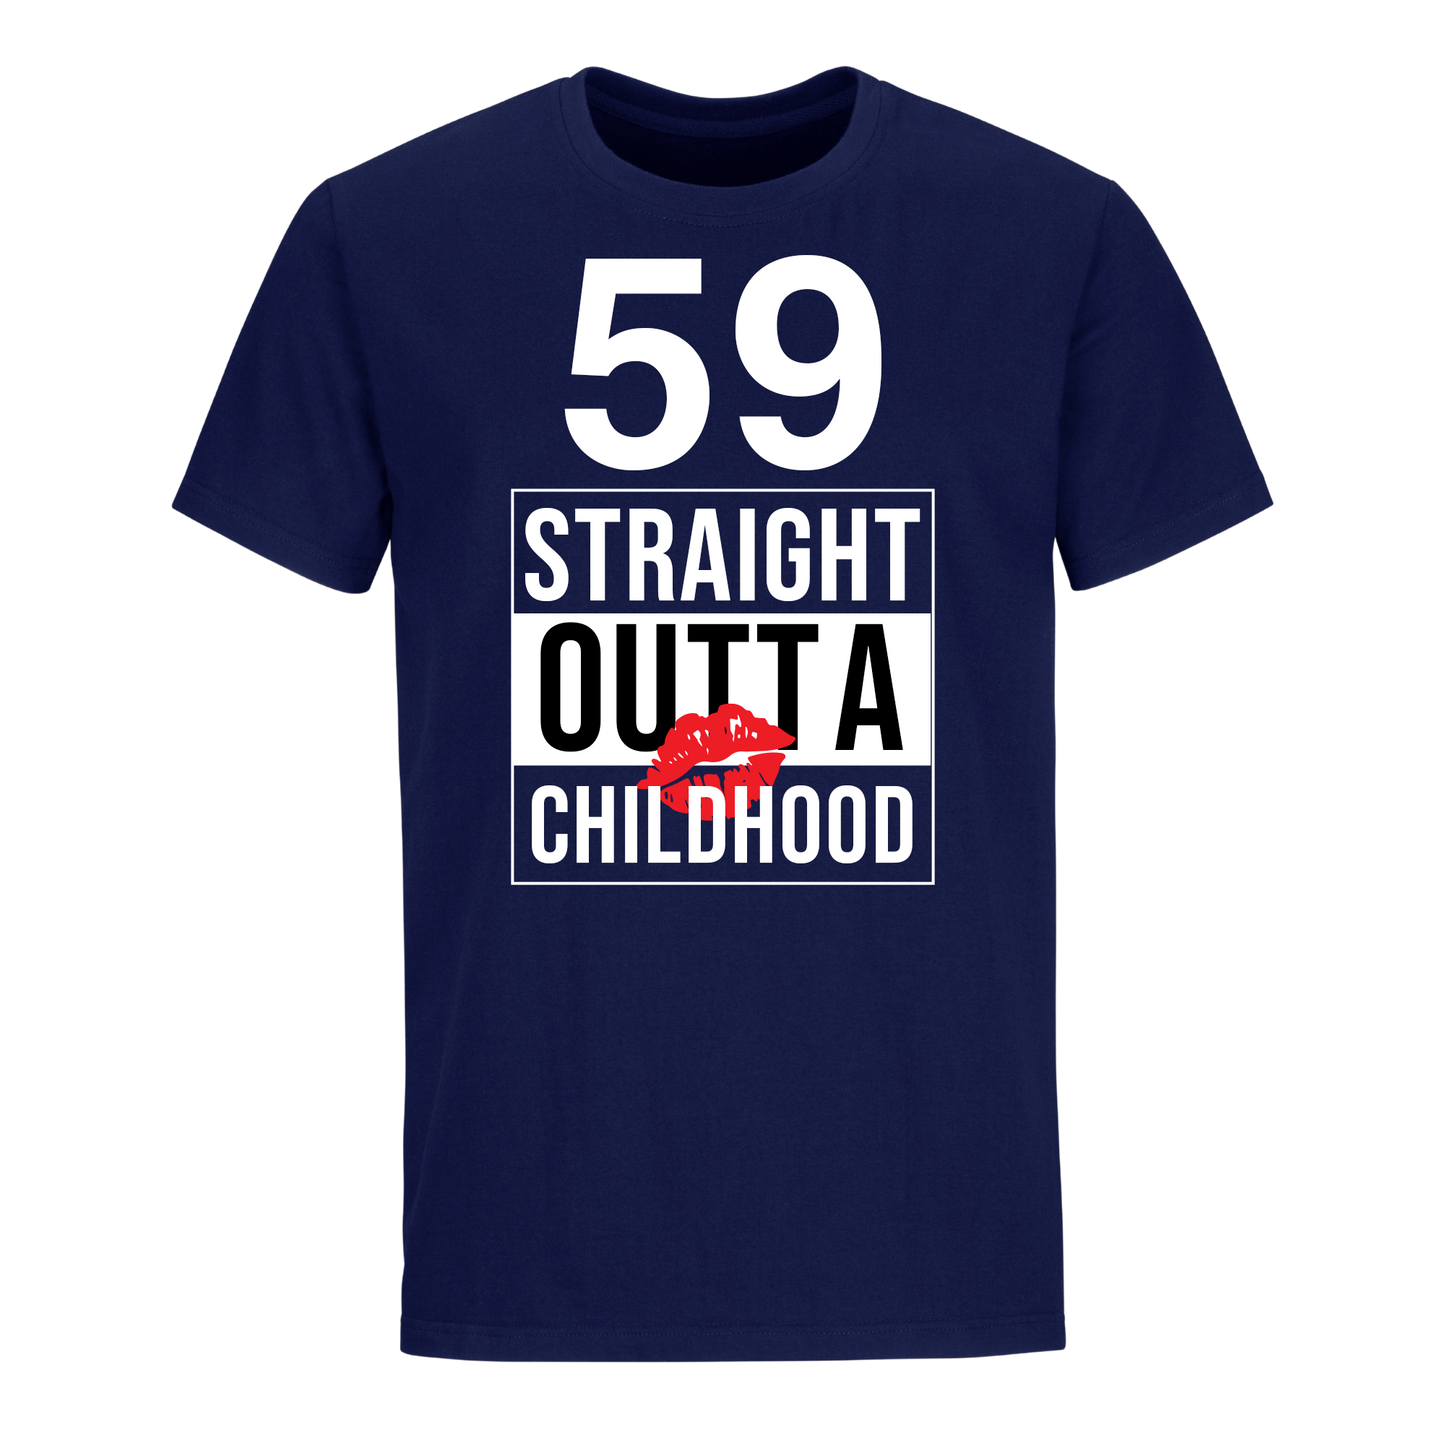 59 STRAIGHT OUTTA CHILDHOOD UNISEX SHIRT